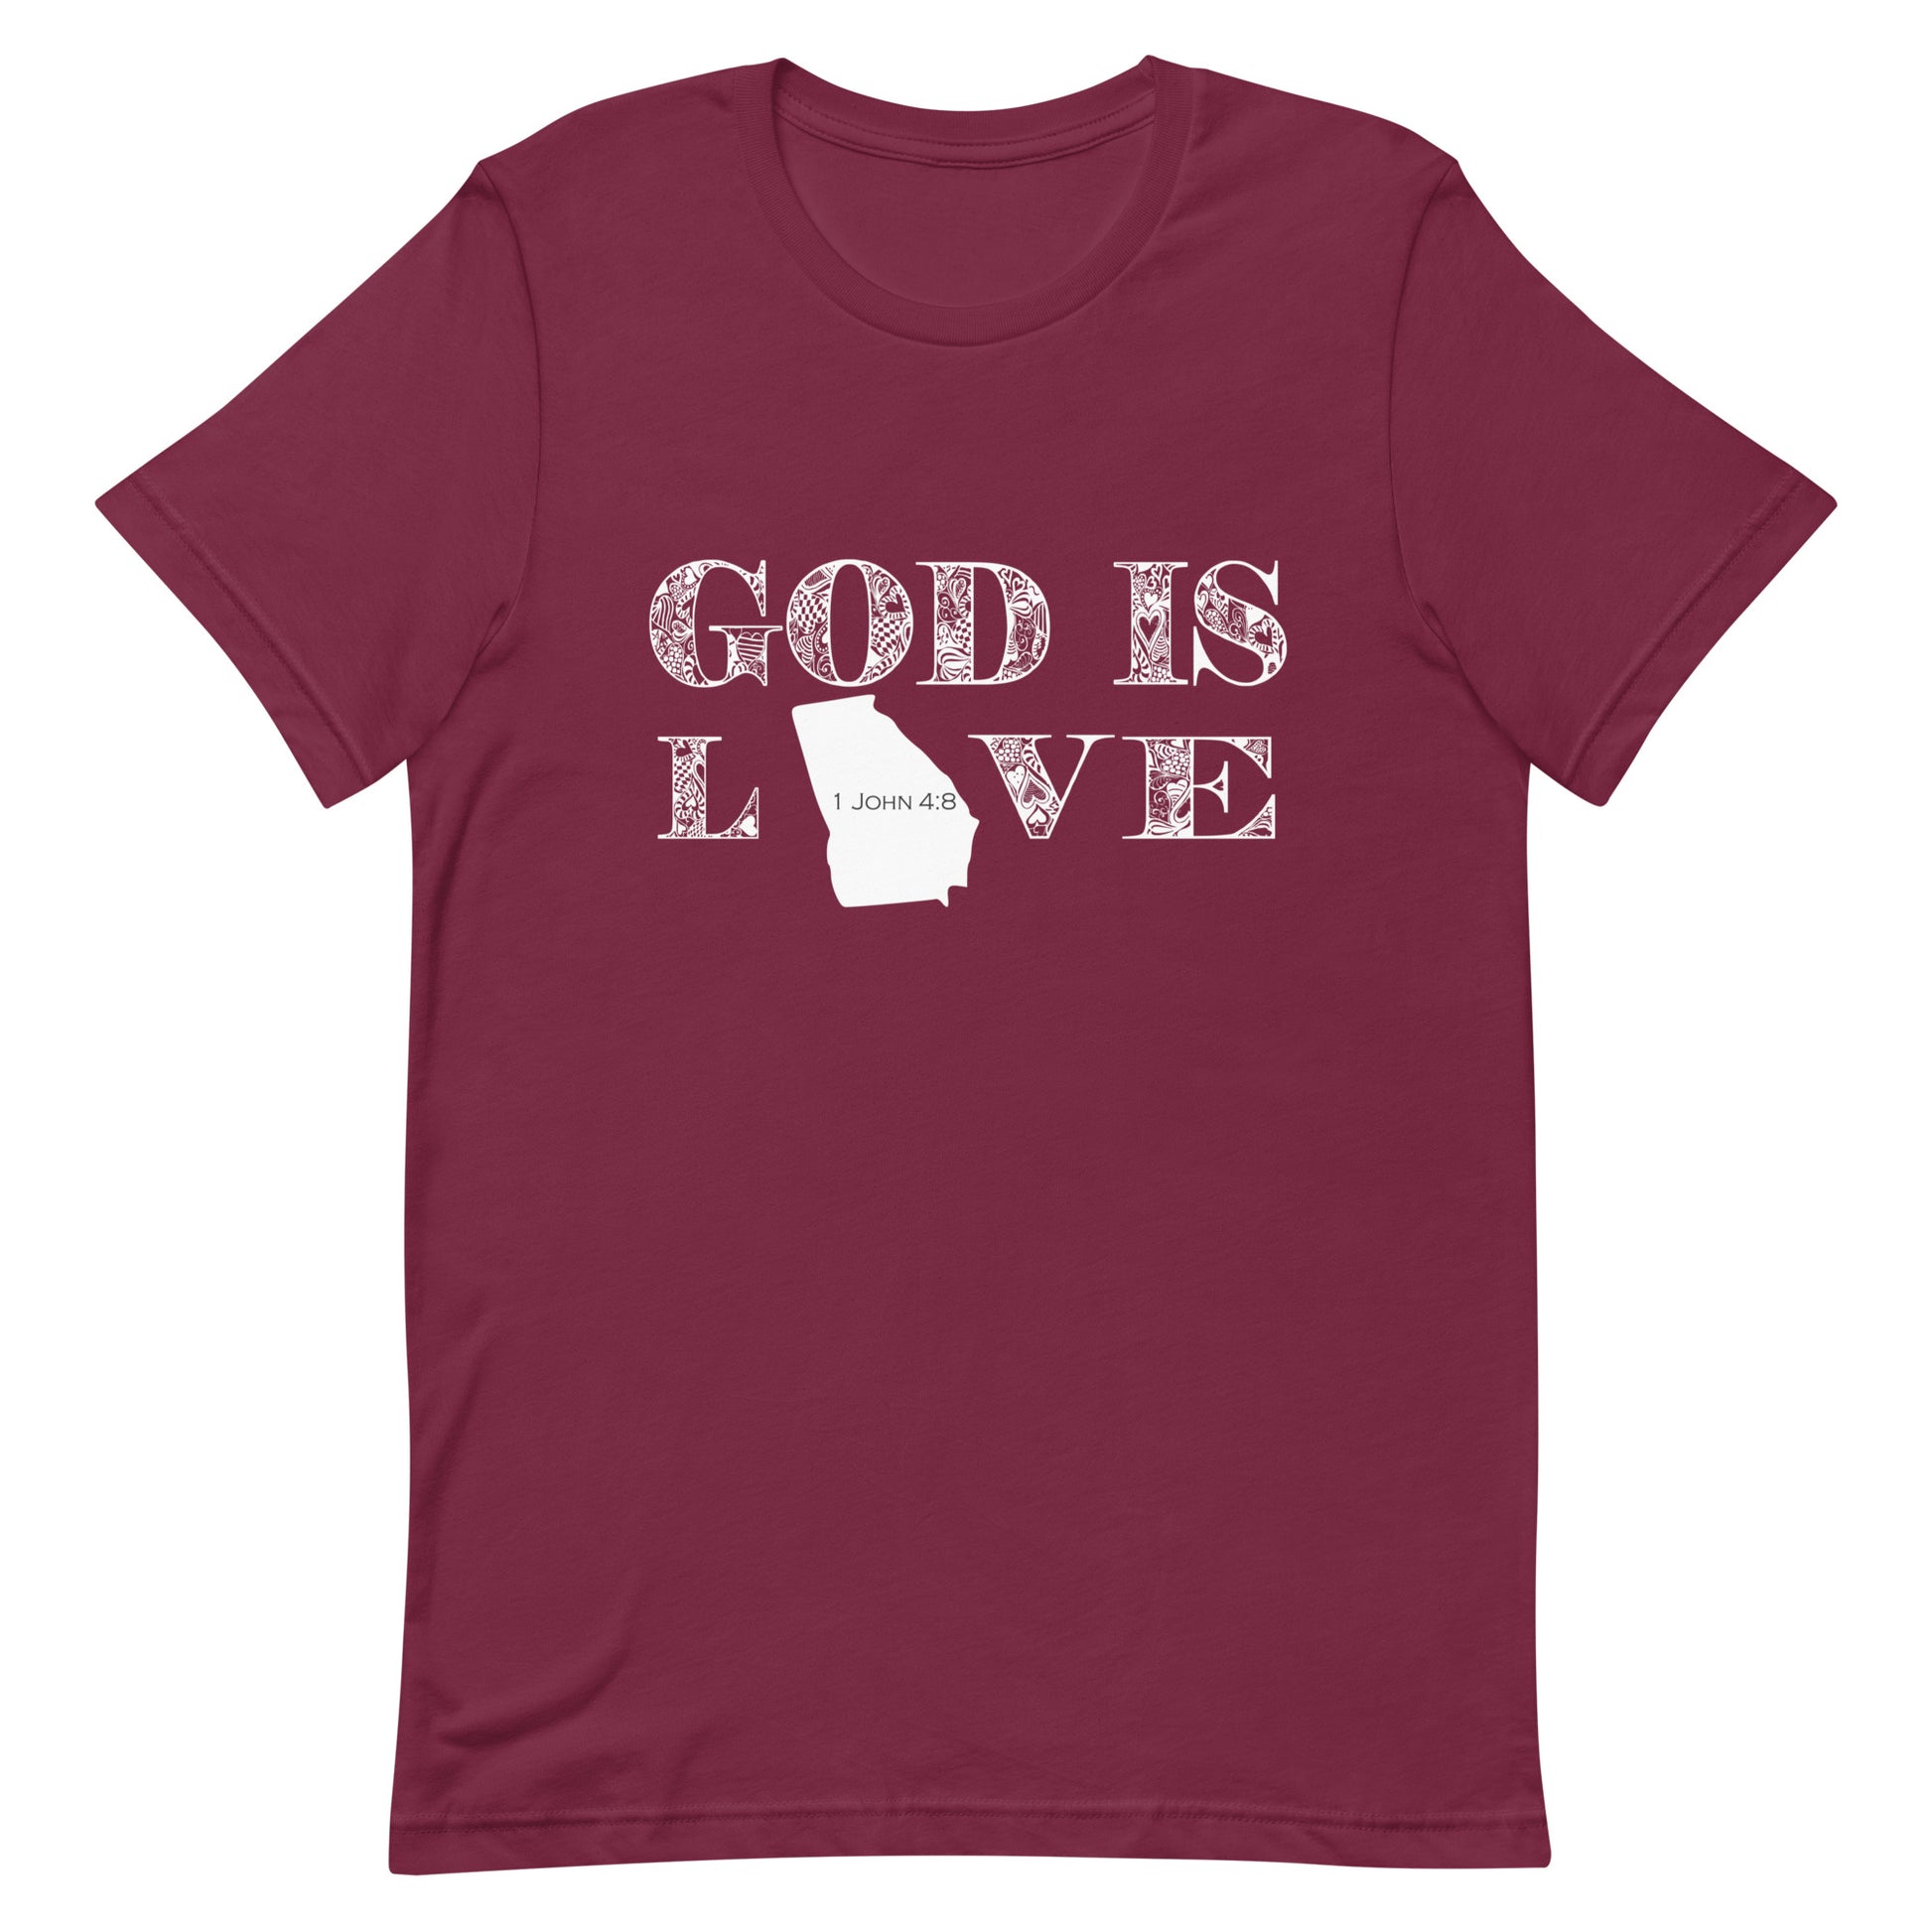 1 John 4:8 God is love Georgia T-shirt maroon